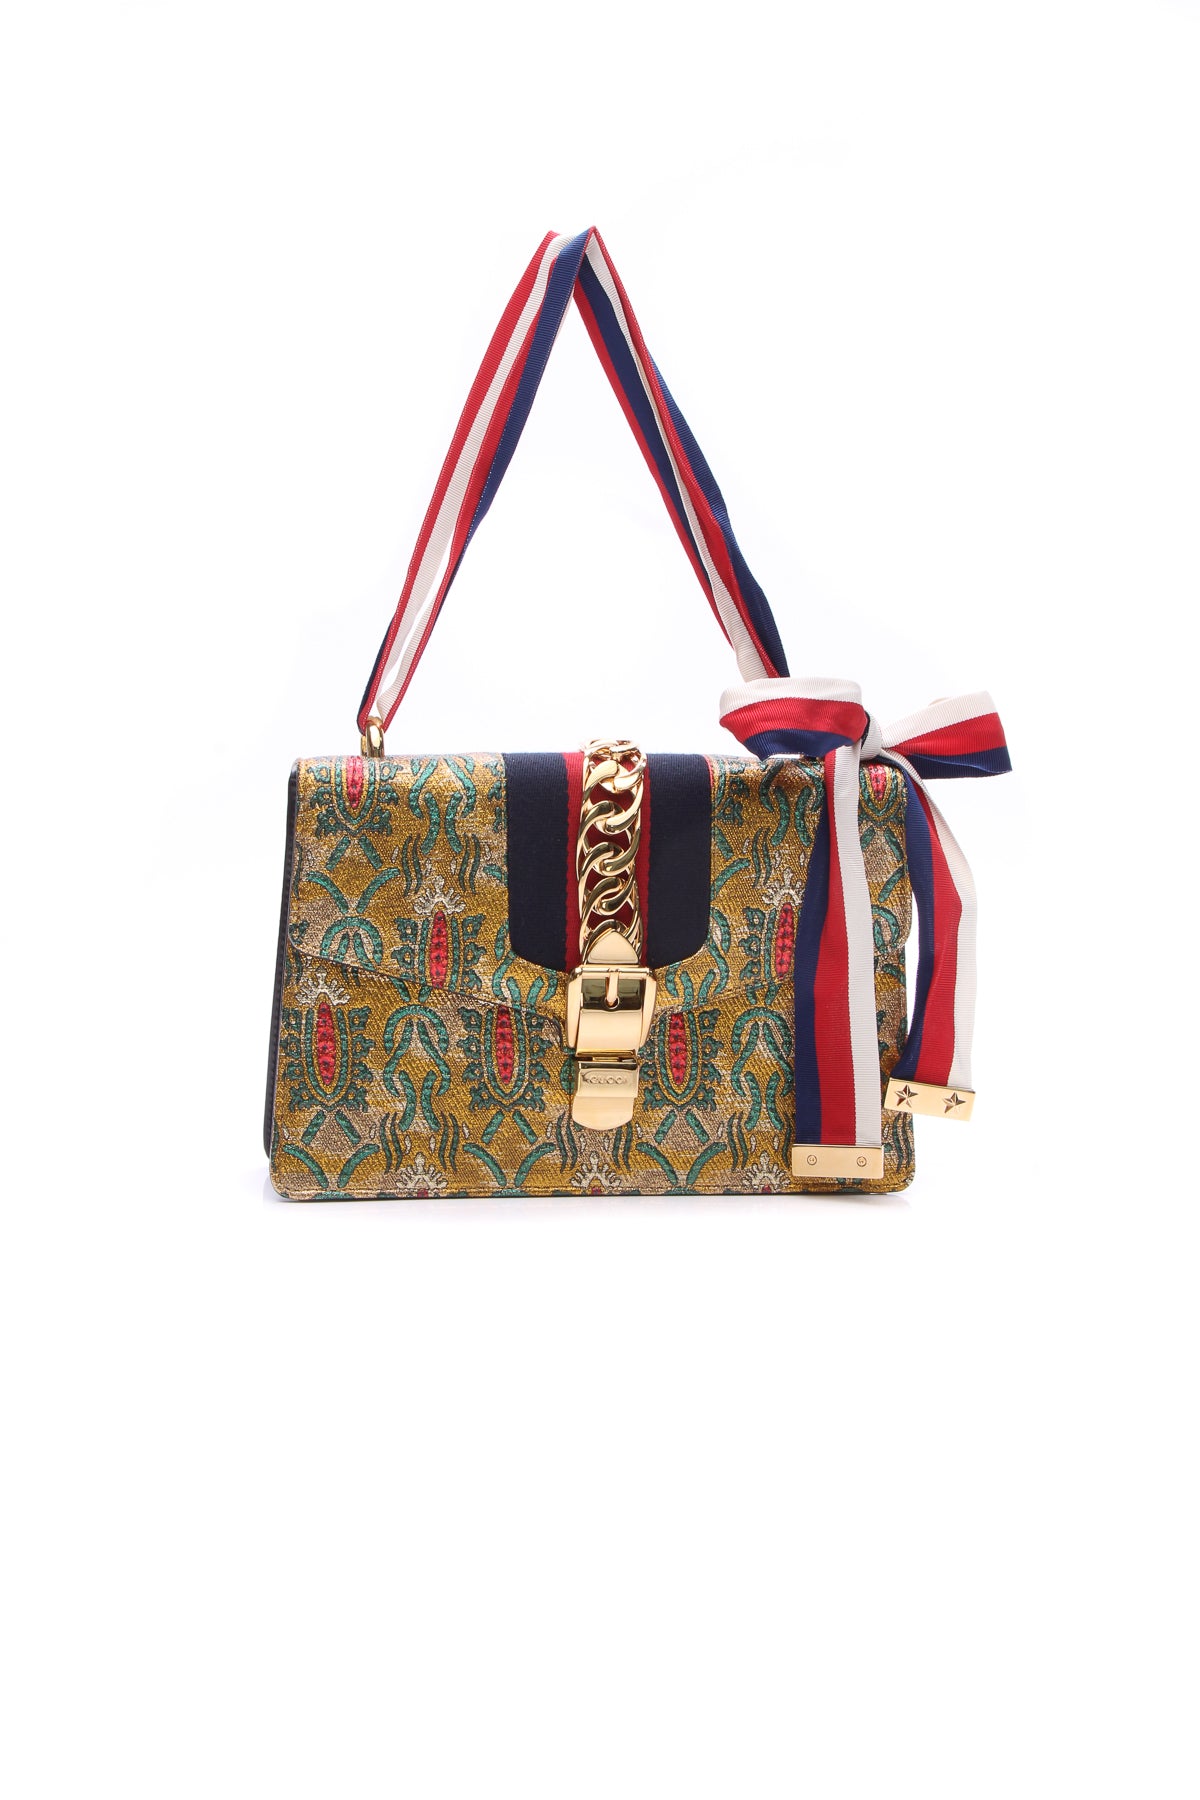 Gucci Brocade Small Sylvie Shoulder Bag - Iridescent Gold - Couture USA